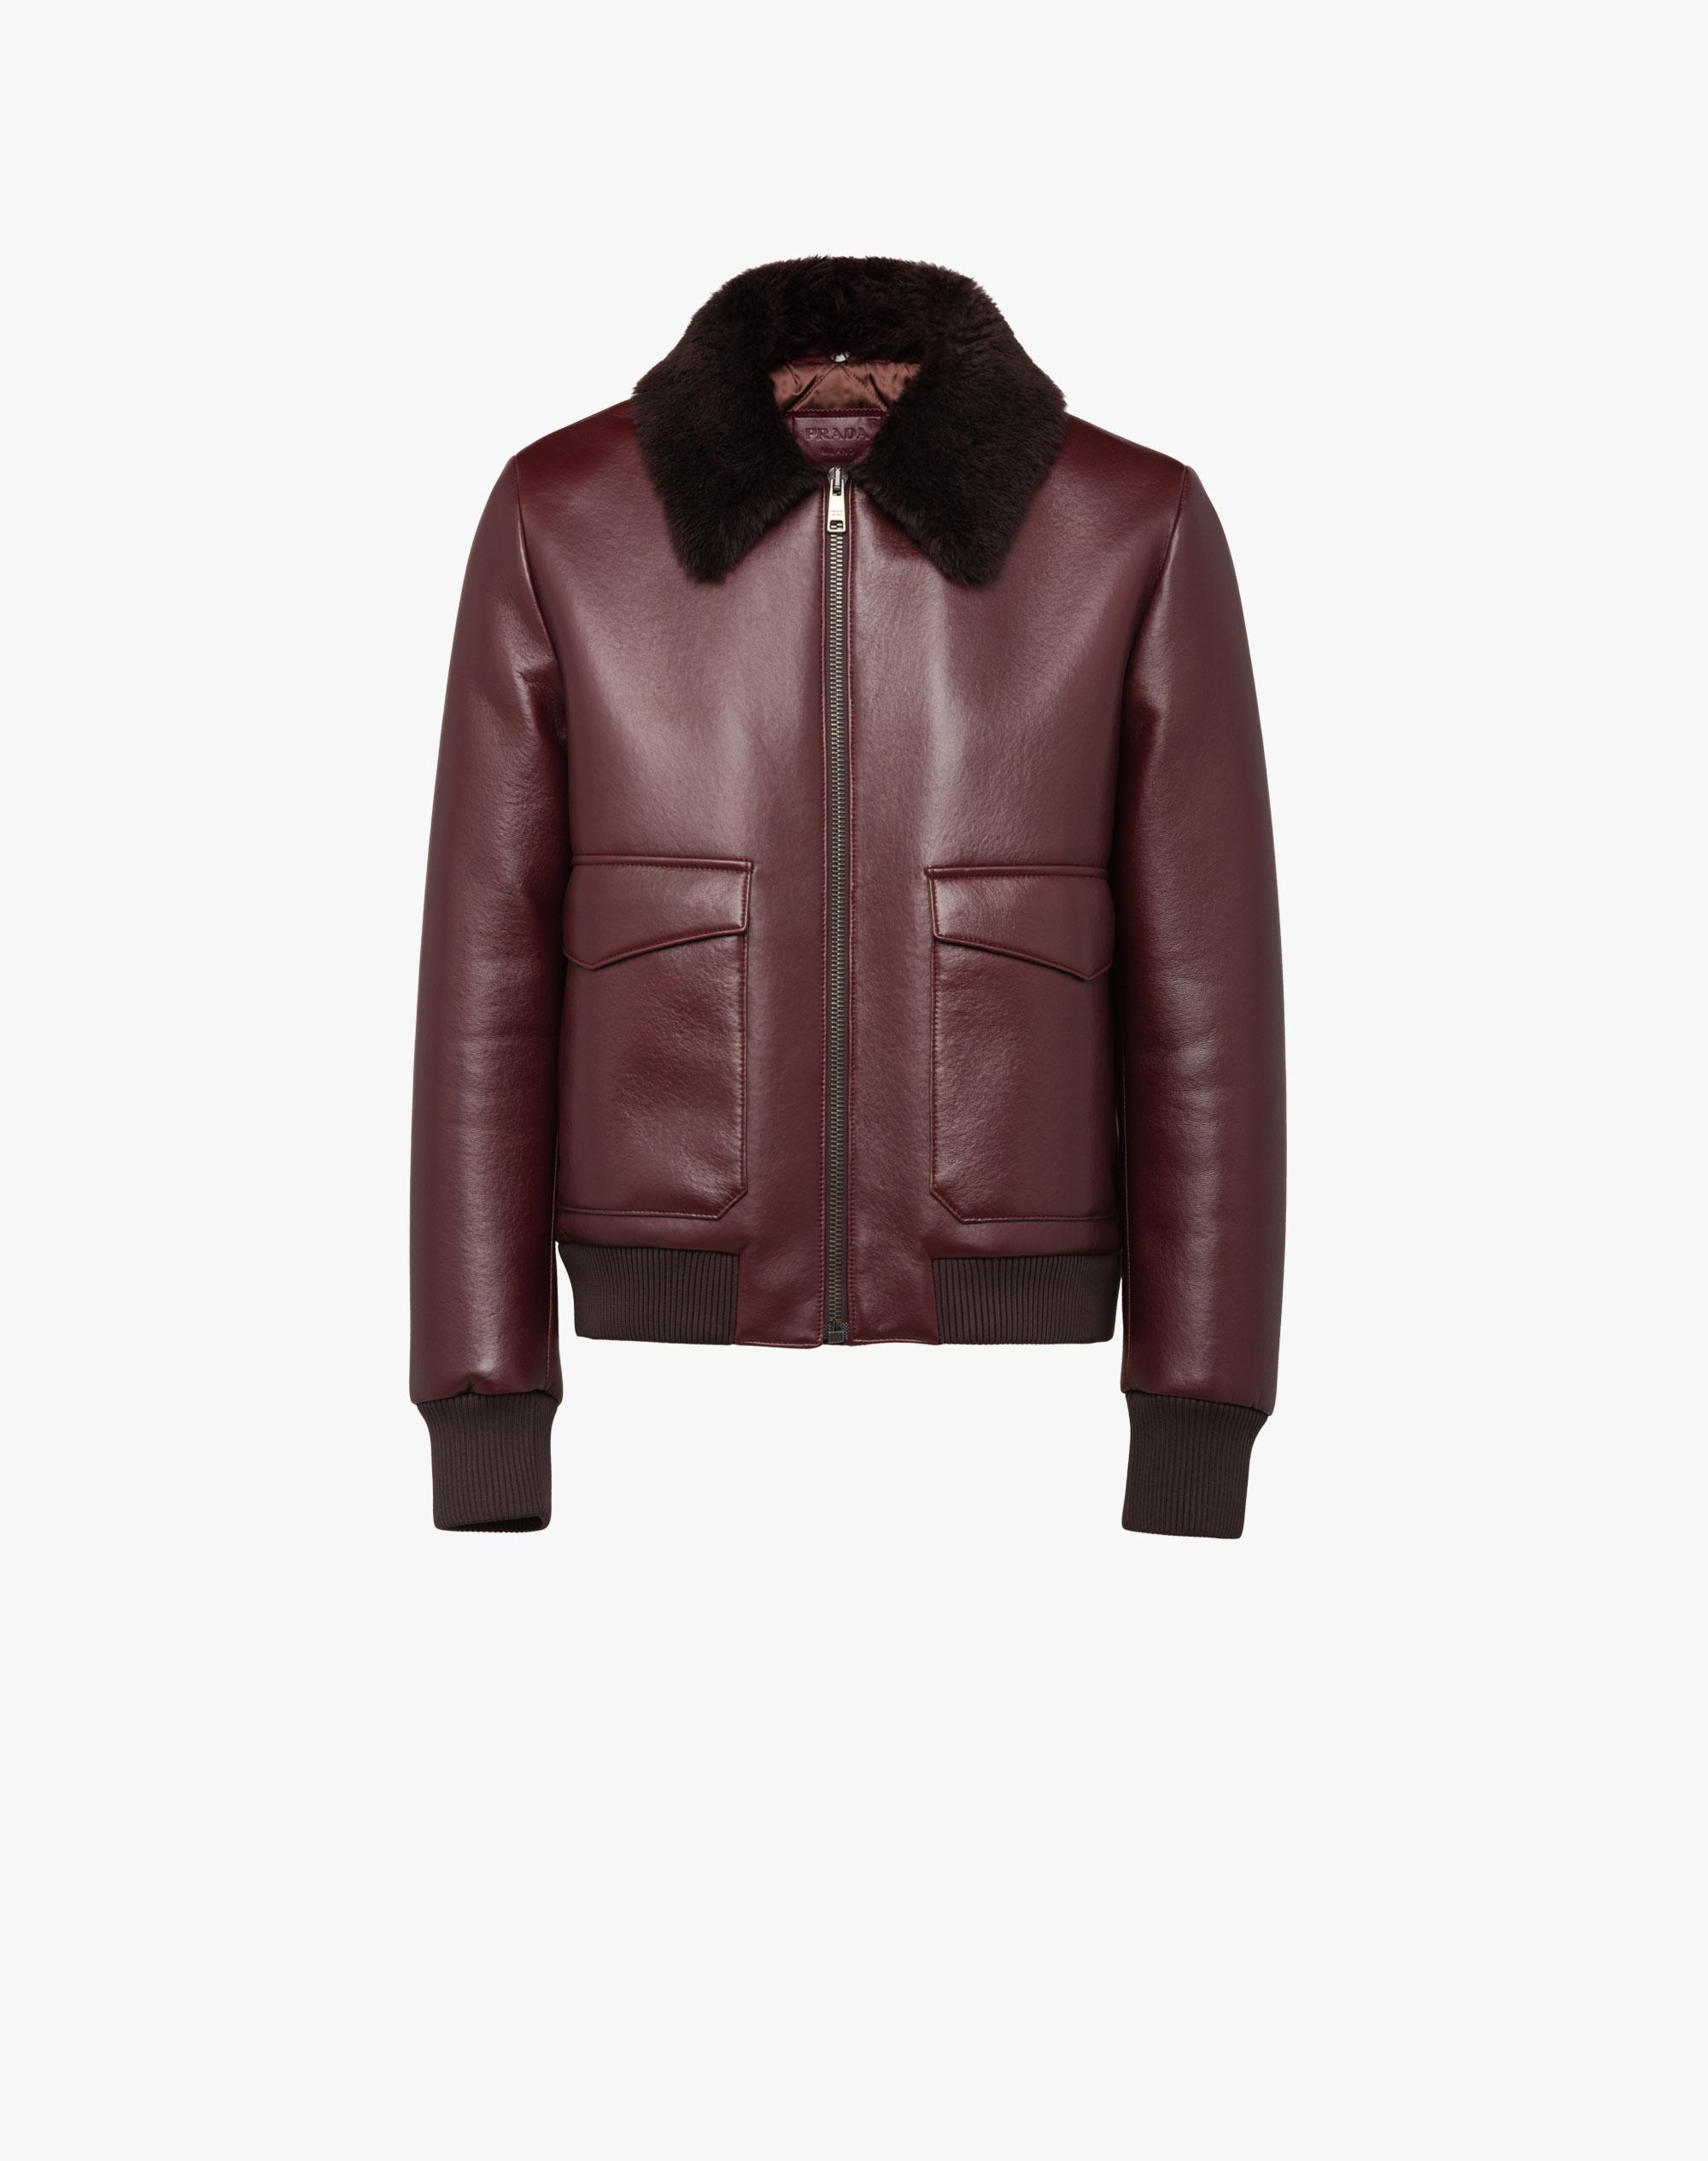 سلى القدرة برونز prada brown leather jacket - plasto-tech.com